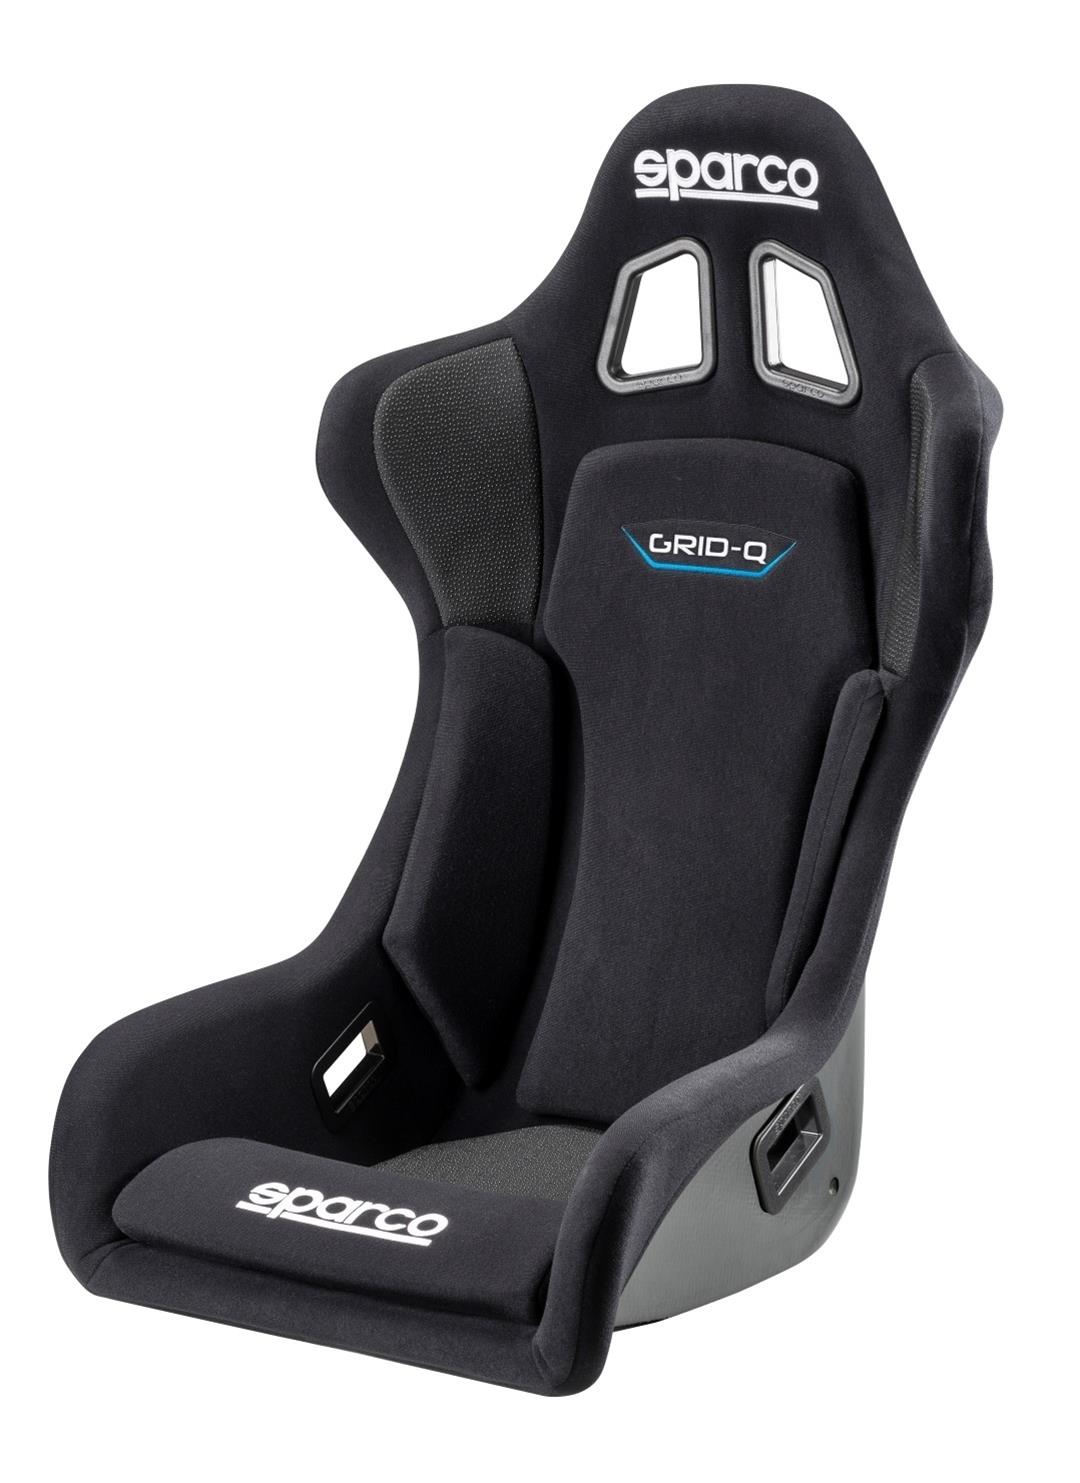 SPARCO SEAT GRID Q BLACK